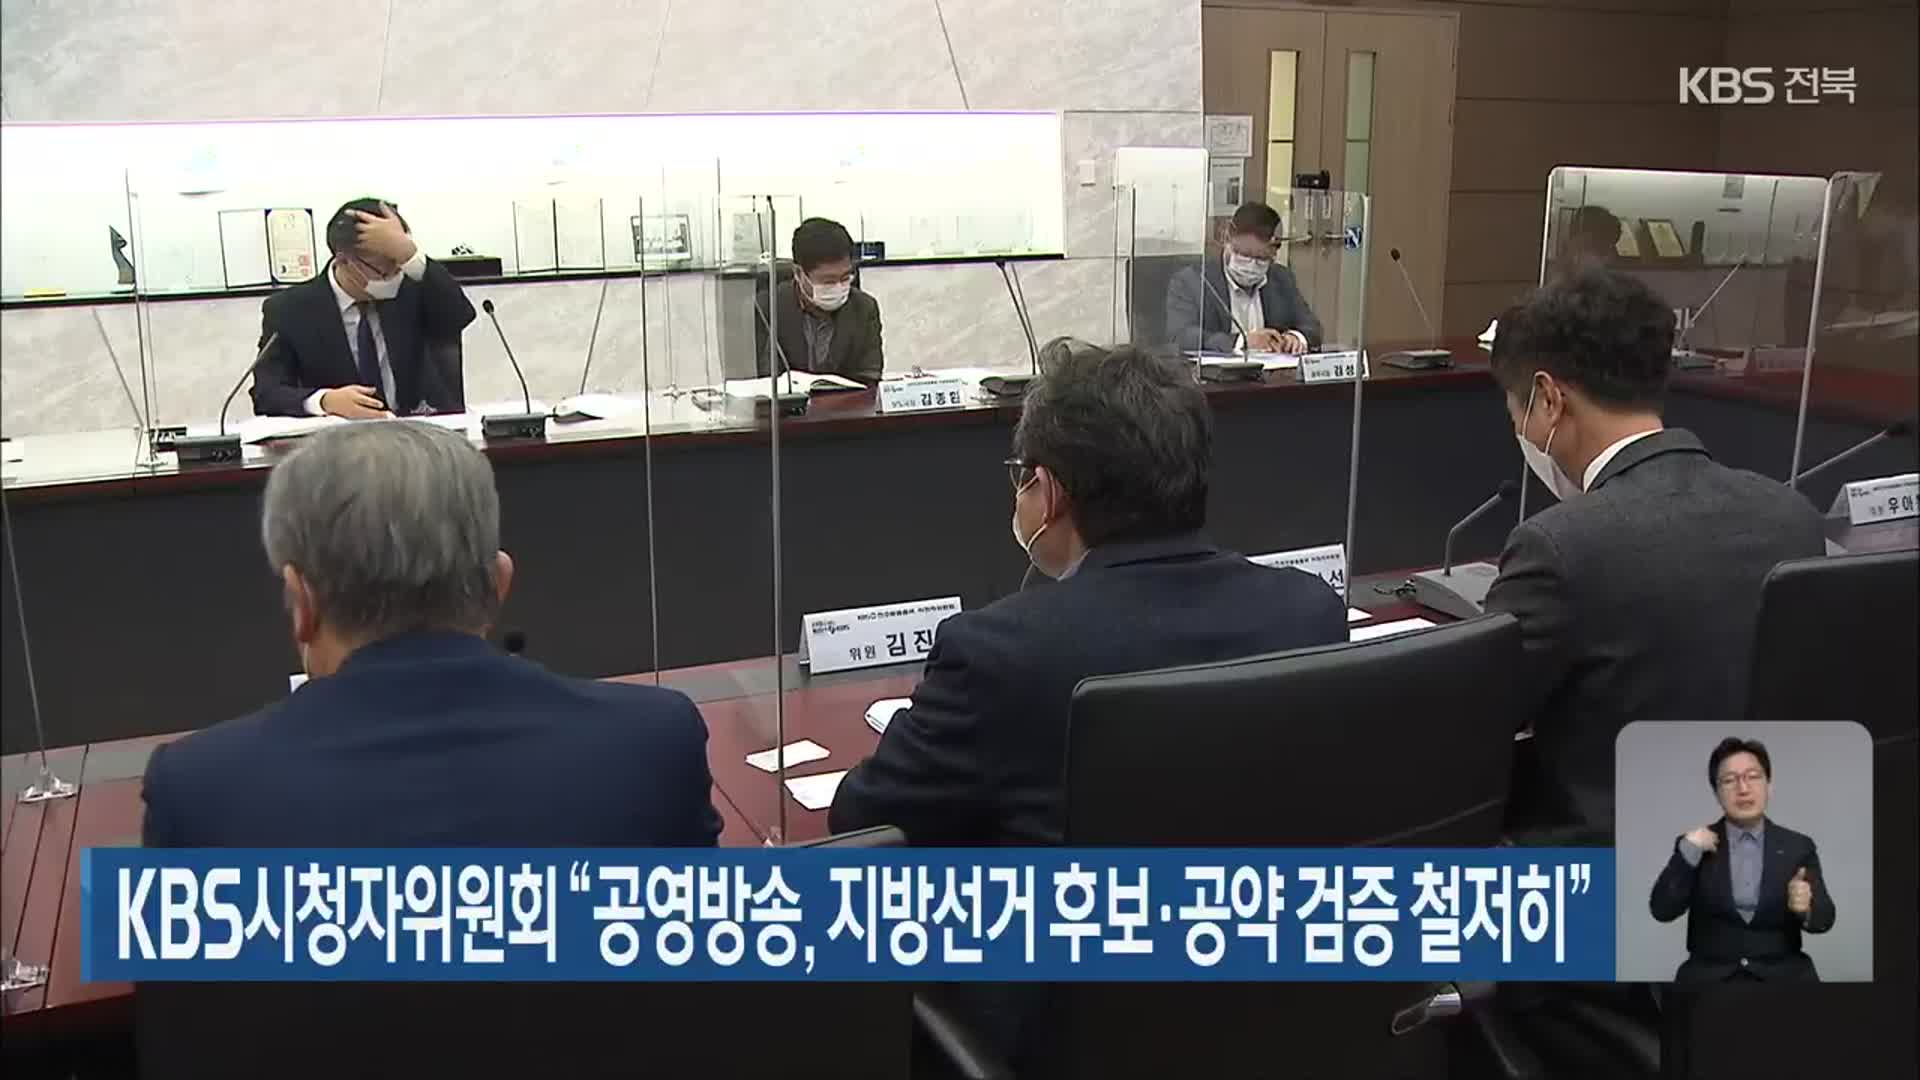 KBS시청자위원회 “공영방송, 지방선거 후보·공약 검증 철저히”